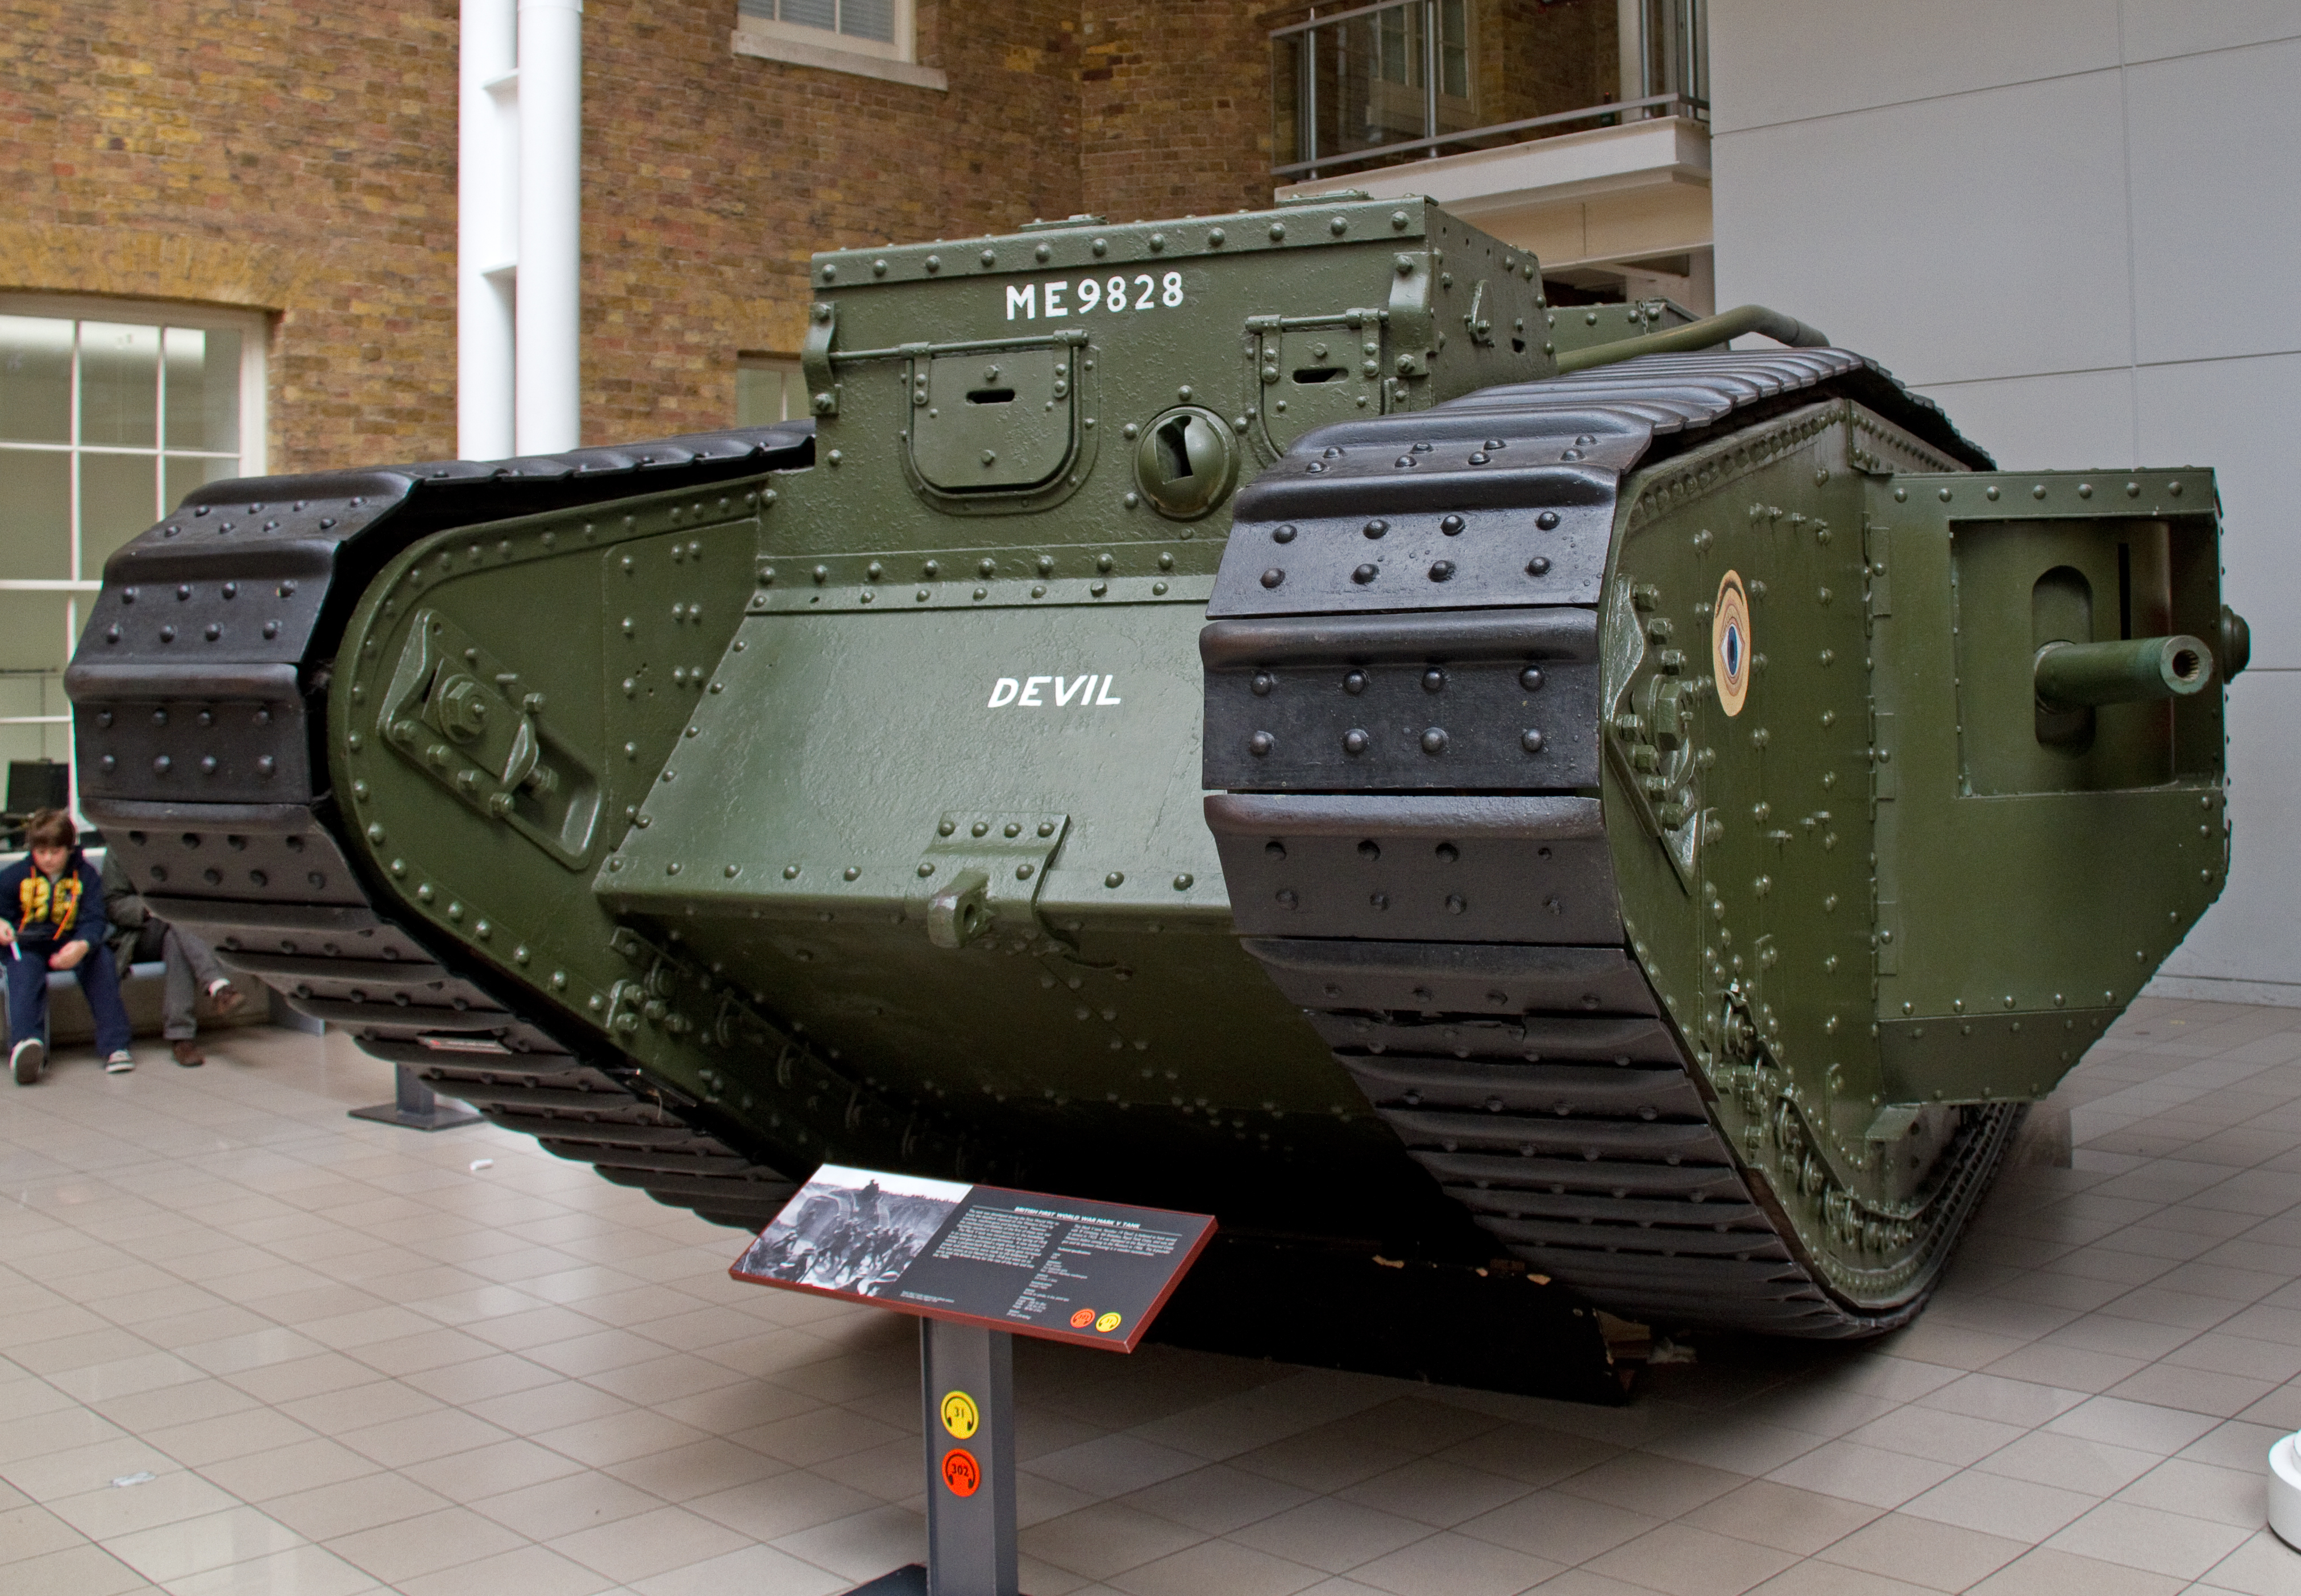 Commons:A. Mark V Tank (6264956888).jpg. 